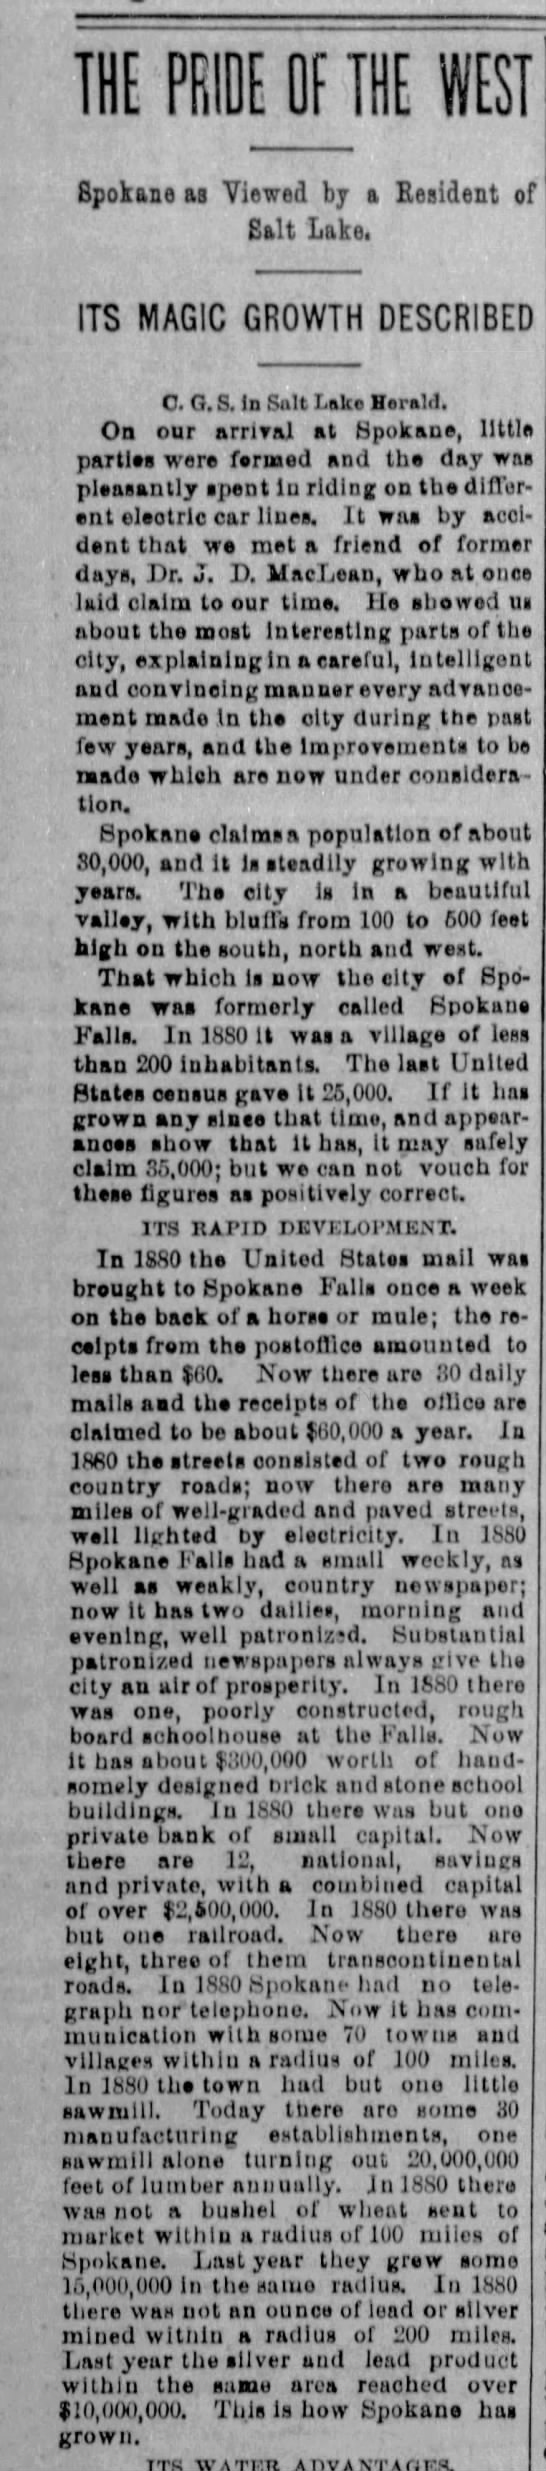 The Growth of Spokane Falls 1880-1893 - 